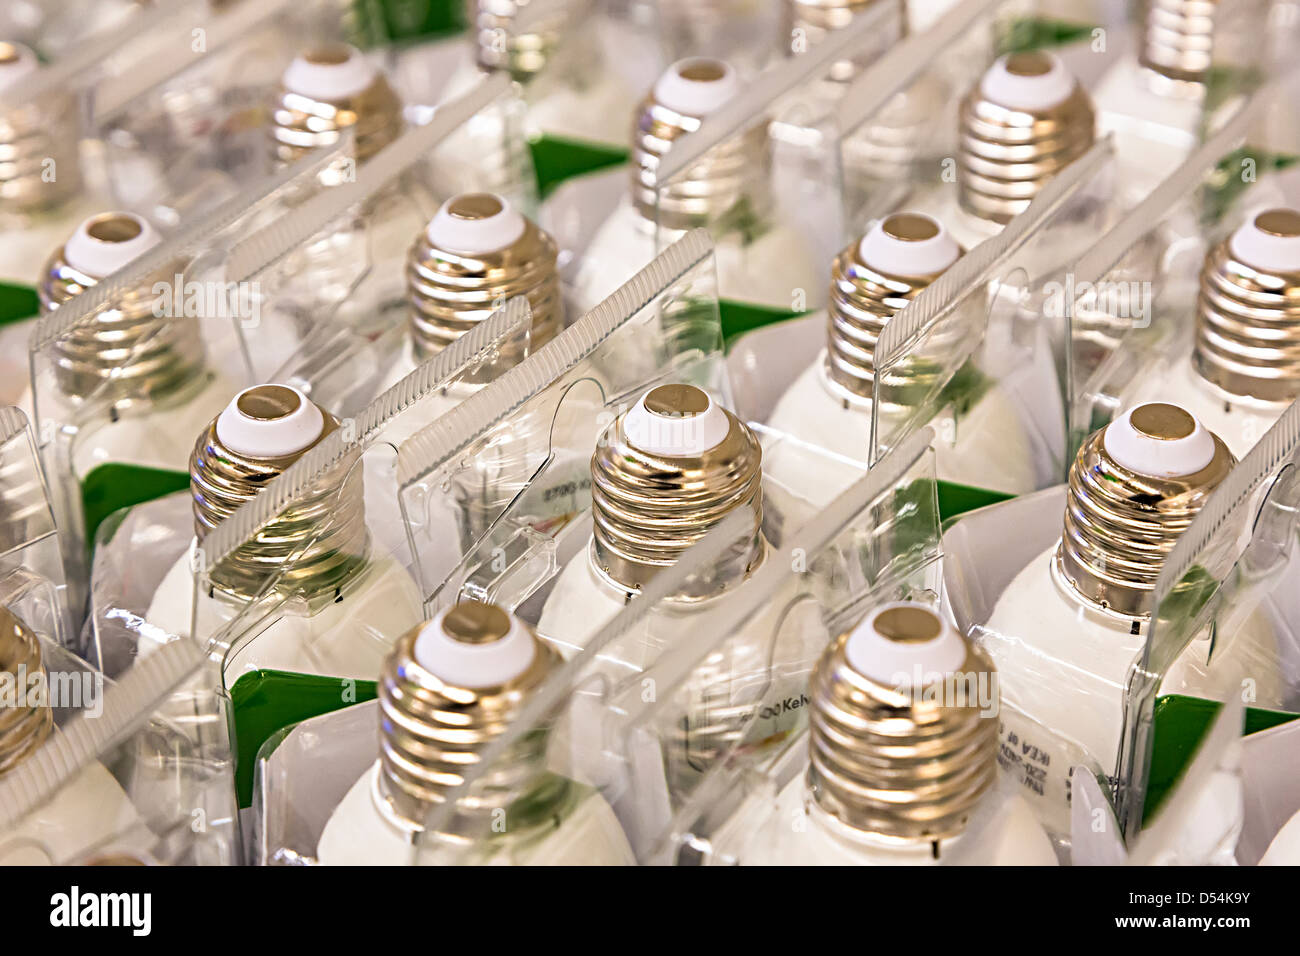 Large Edison screw low energy light bulbs in cartons, UK Stock Photo